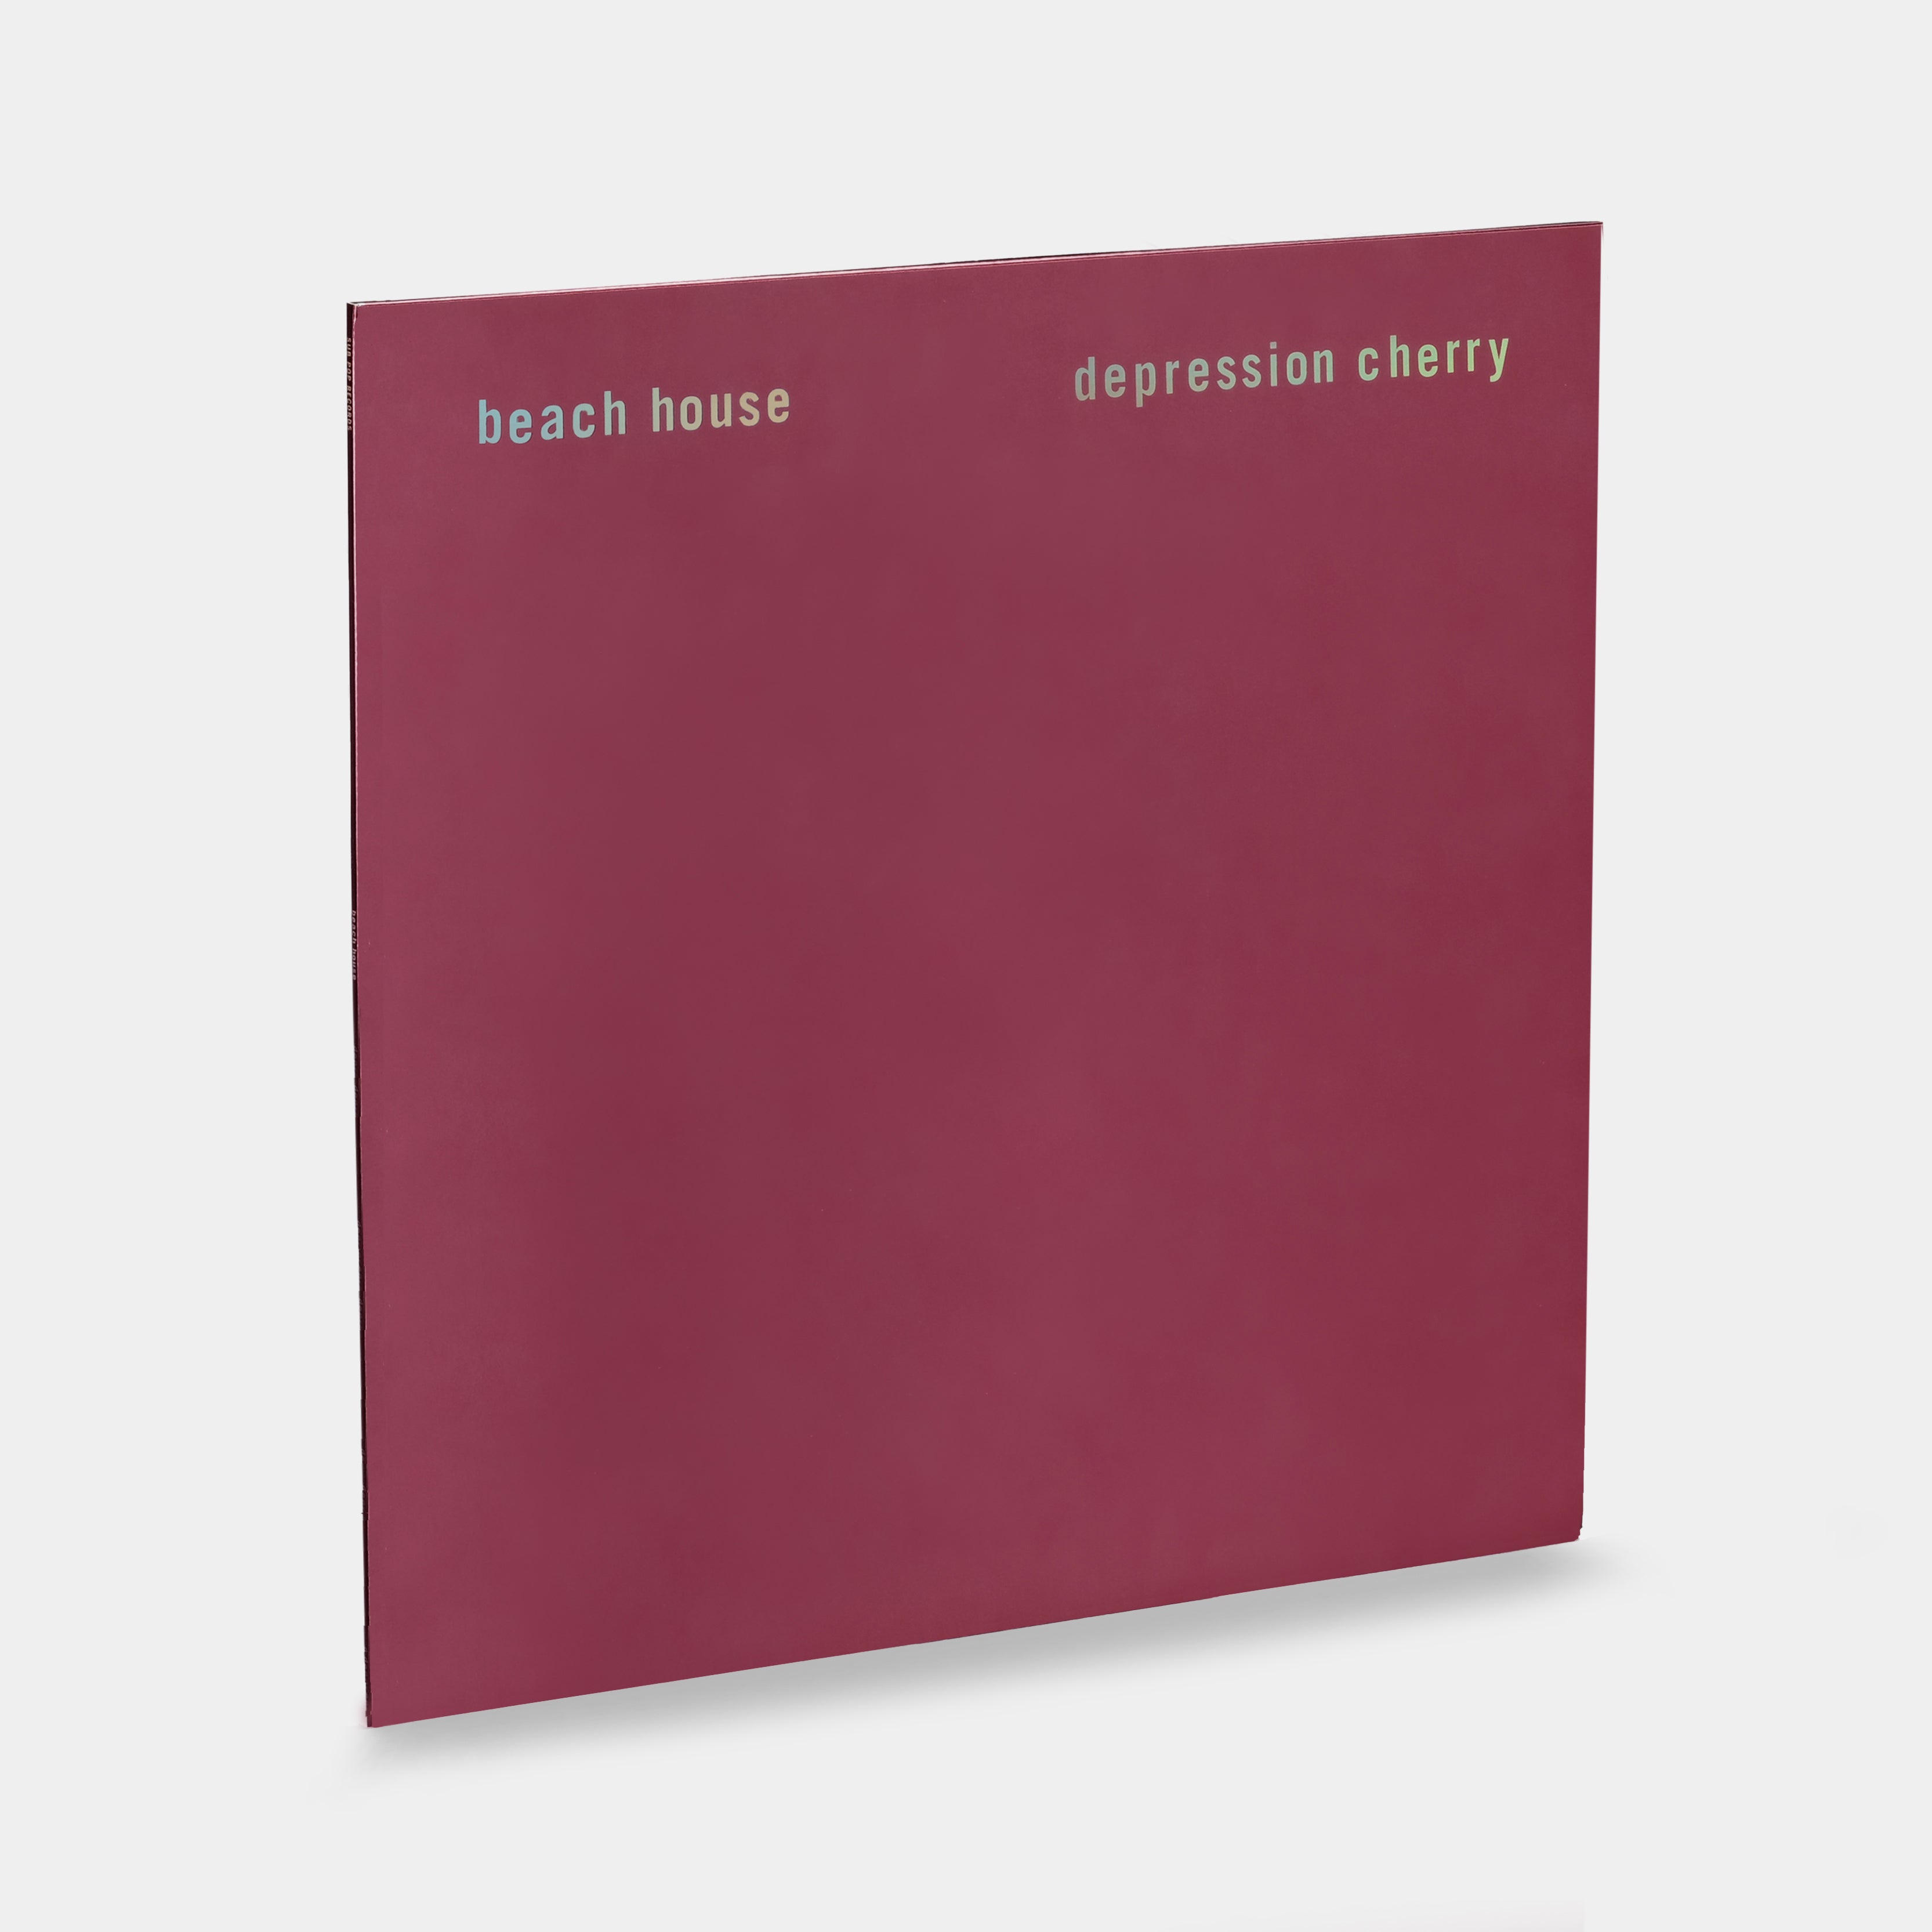 Beach House - Depression Cherry LP Vinyl Record